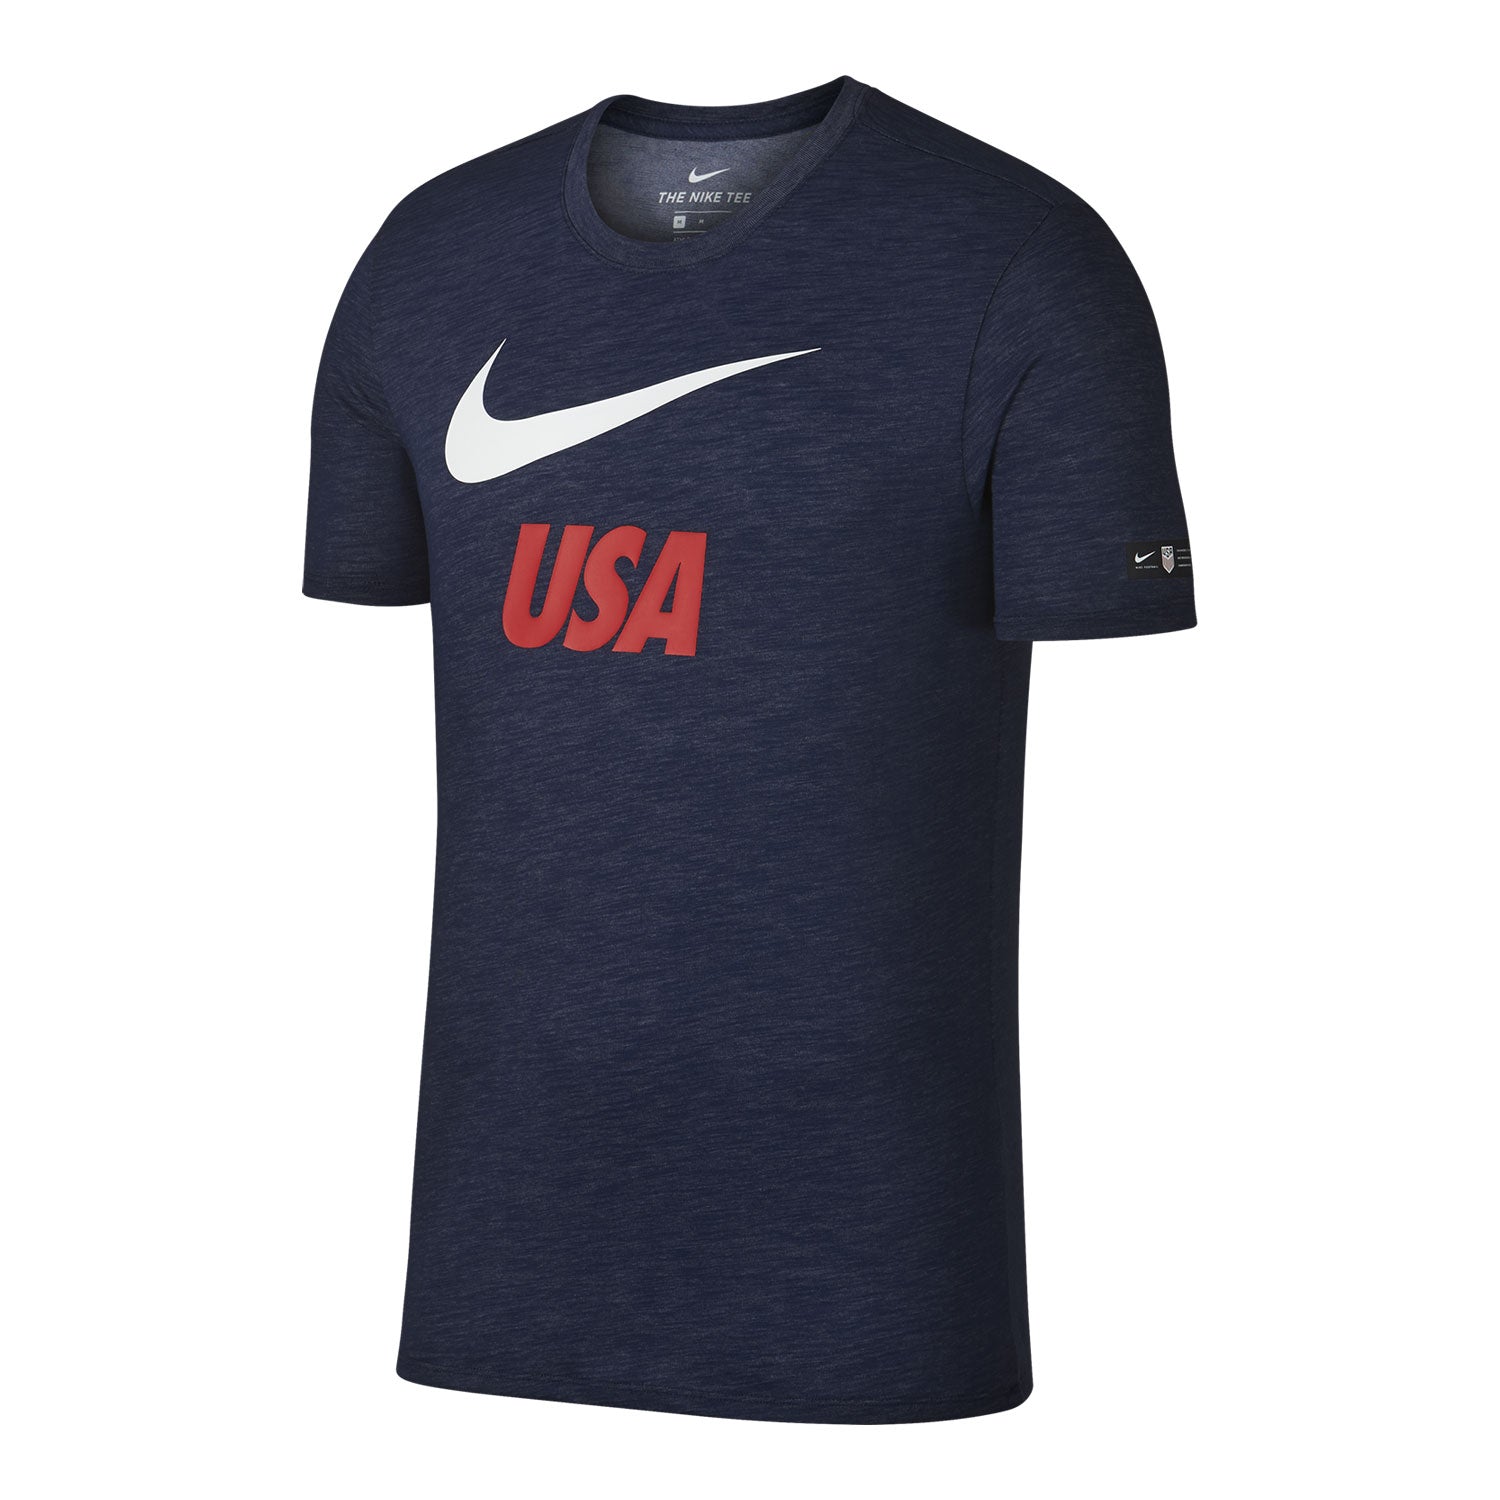 Nike америка. Найк ЮСА. The Nike Tee. Футболка USA Nike. The Nike Tee футболка.